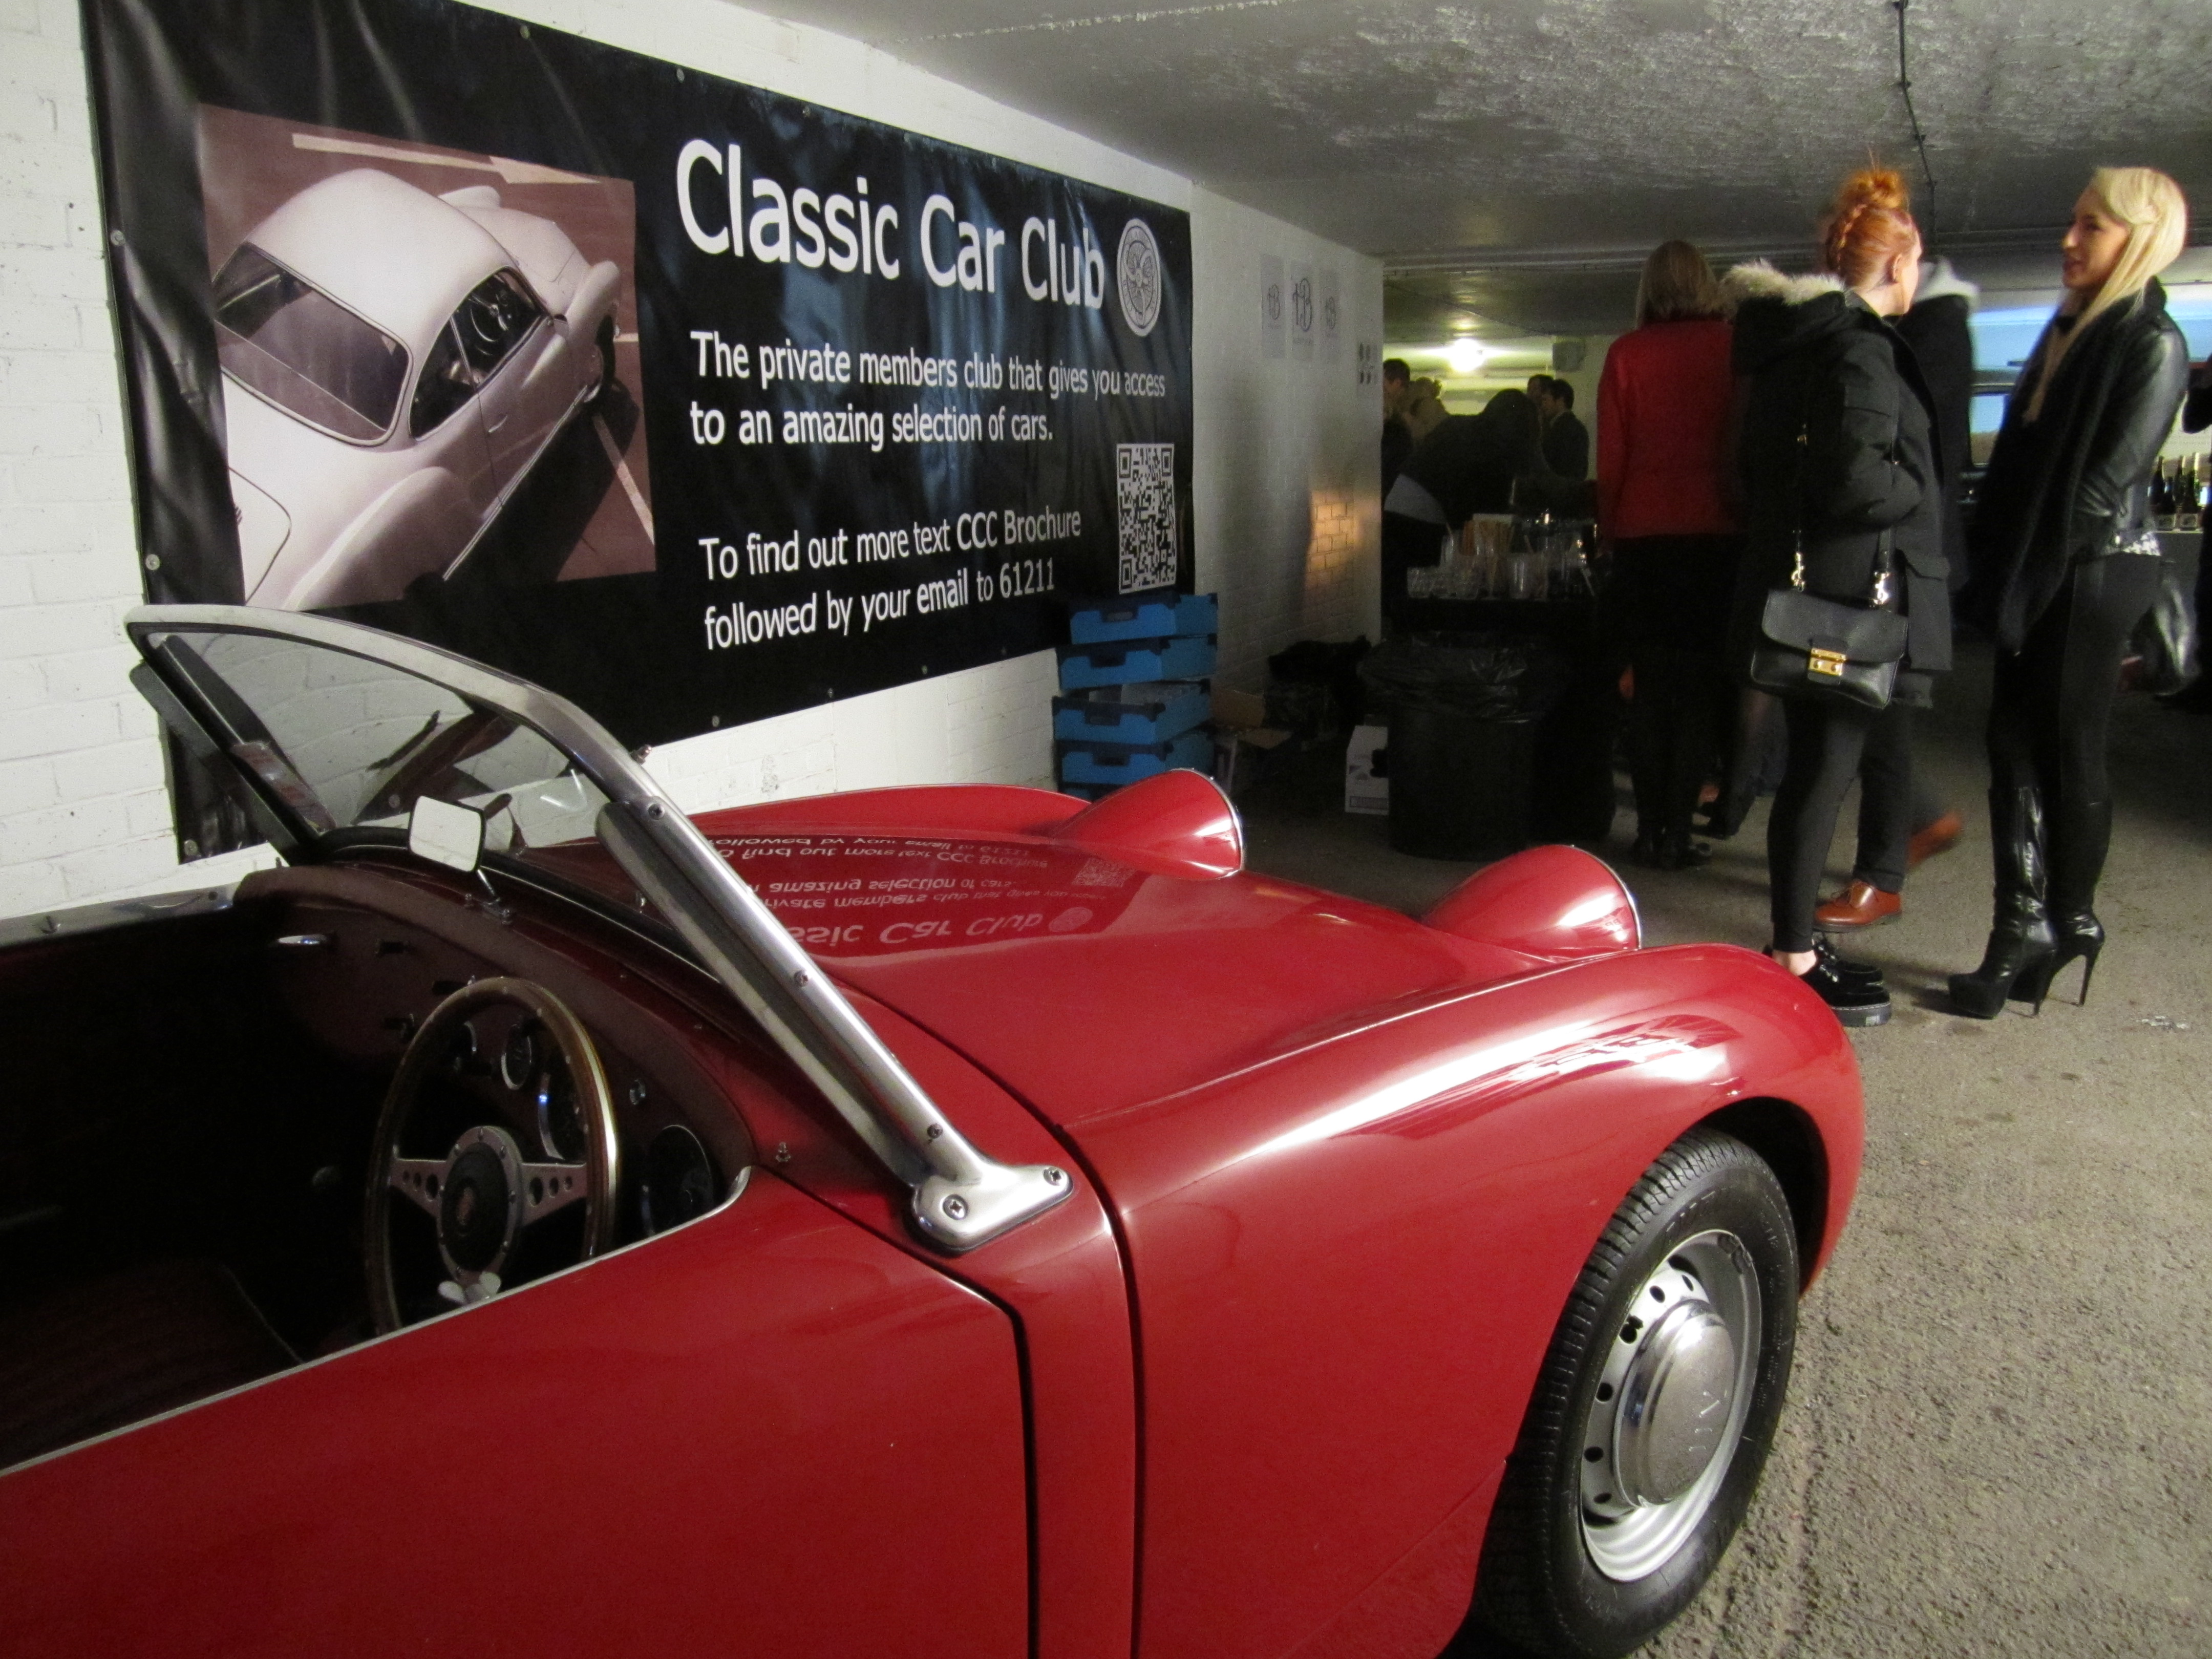 Classic Car Club London